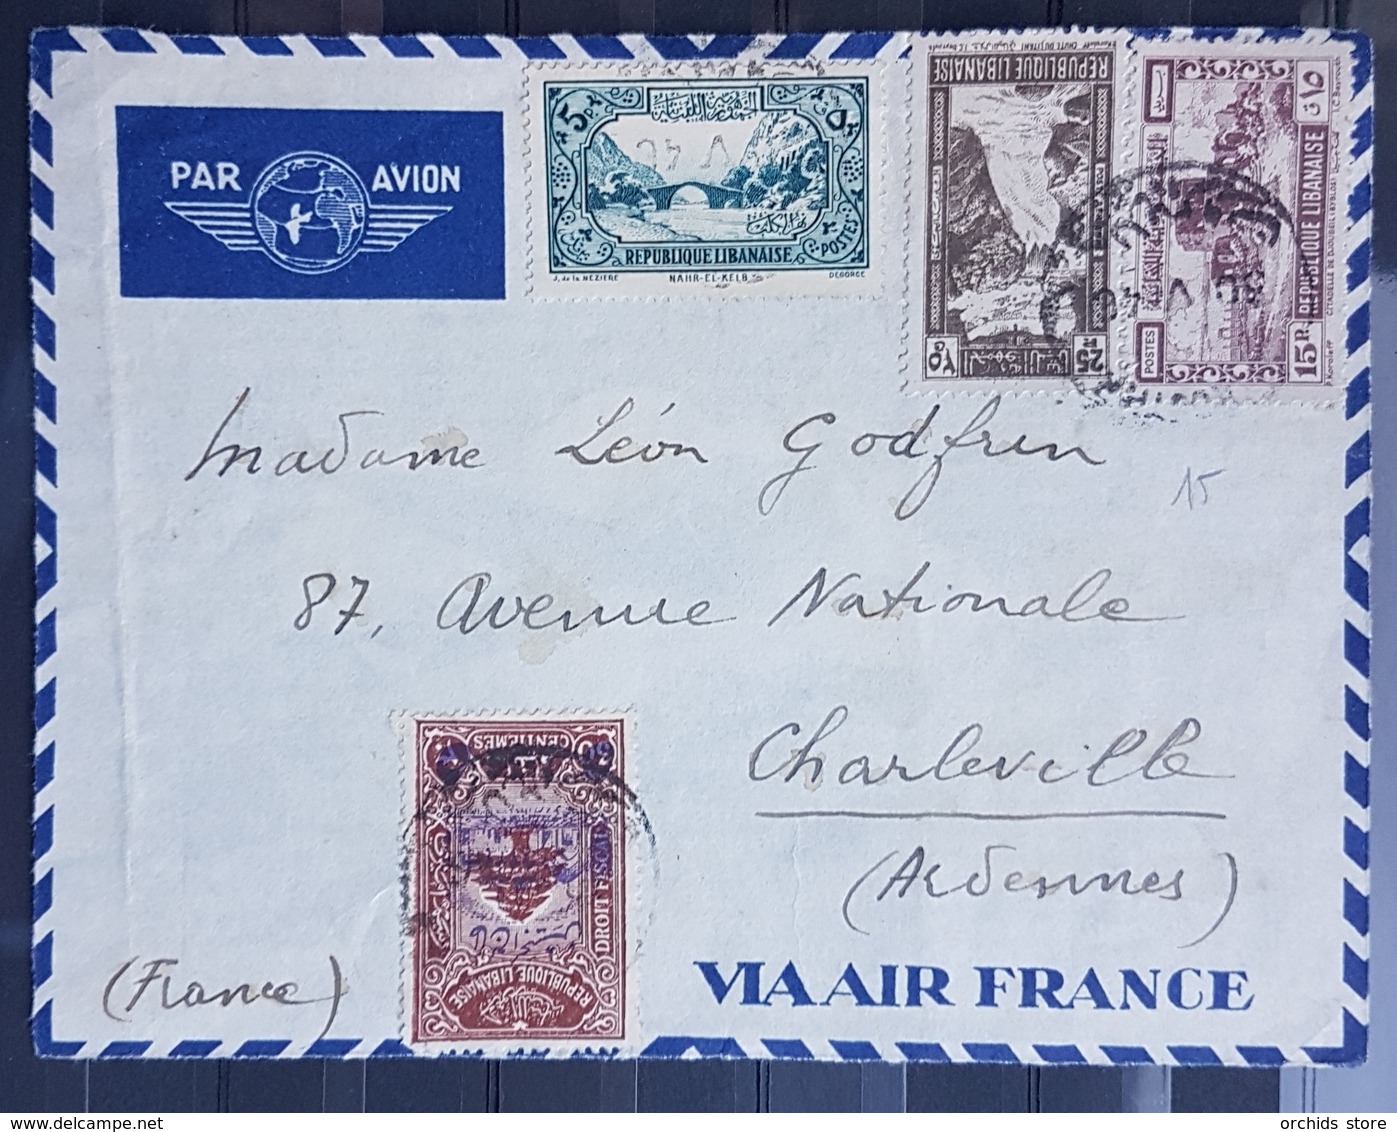 XZ97 Lebanon 1946 Nice Air Mail Front Cover Sent To France VIA AIR FRANCE ! - Lebanon